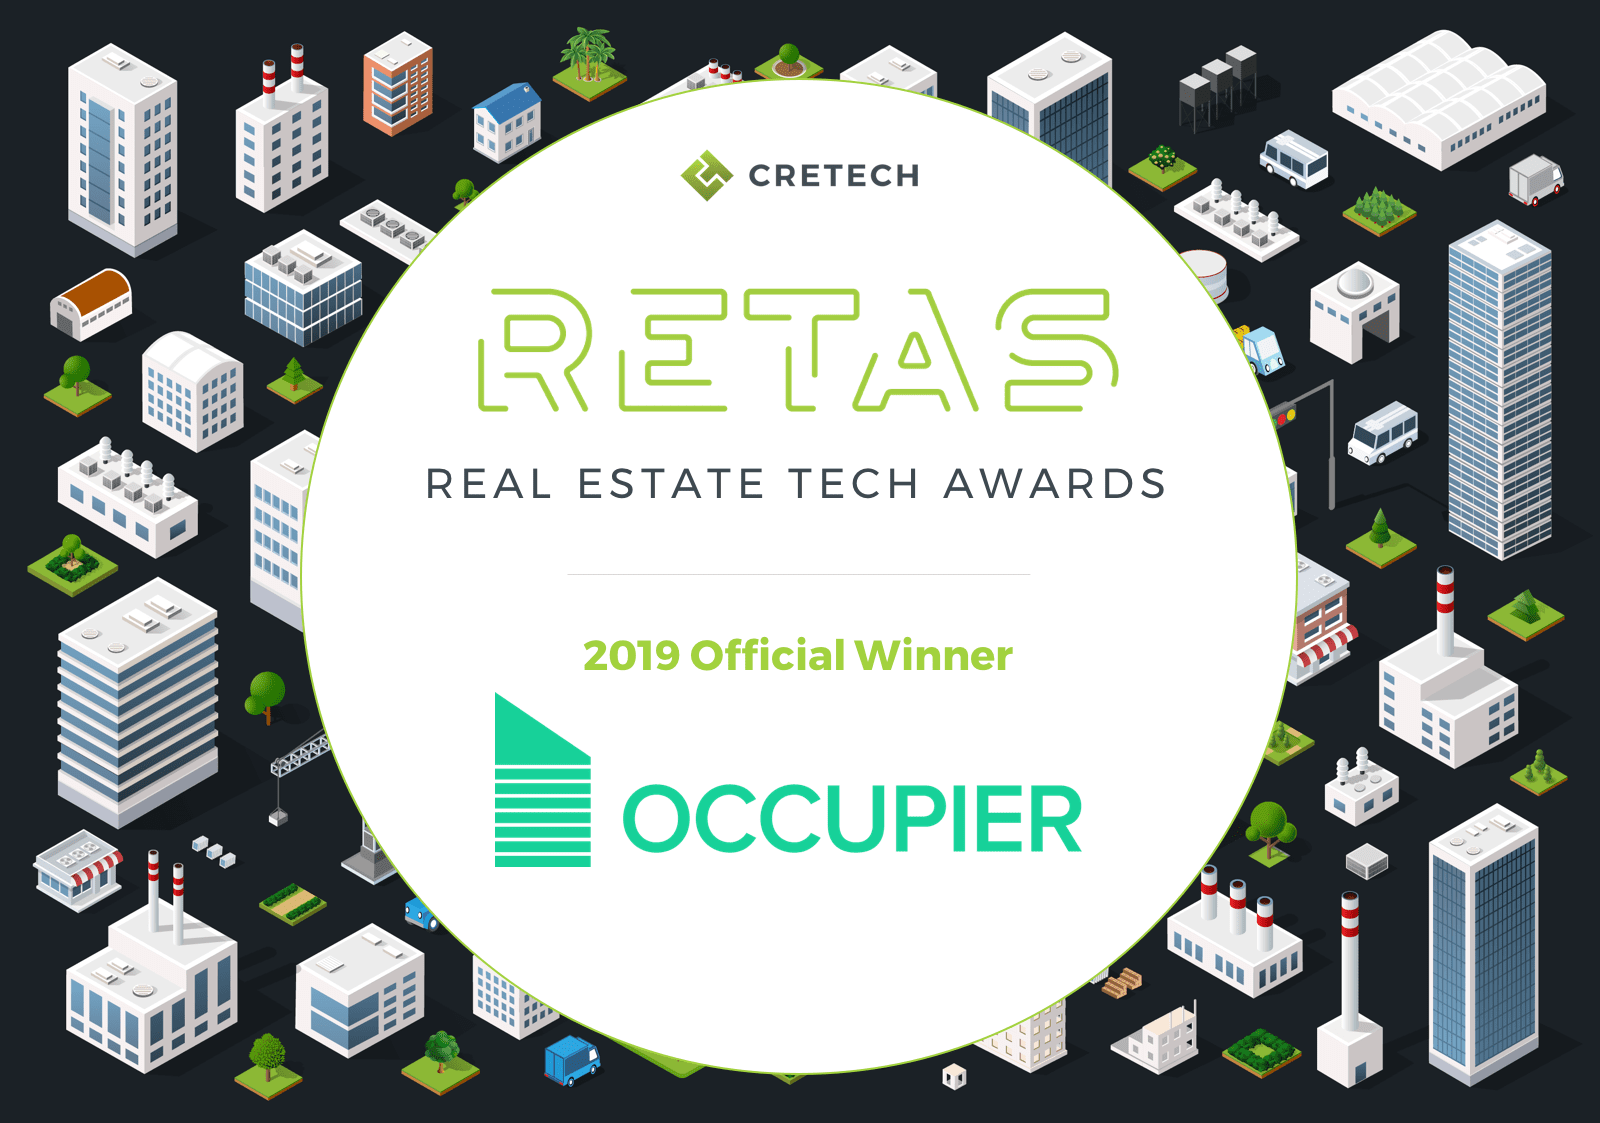 Real Estate Tech Awards 2019 Official Winner